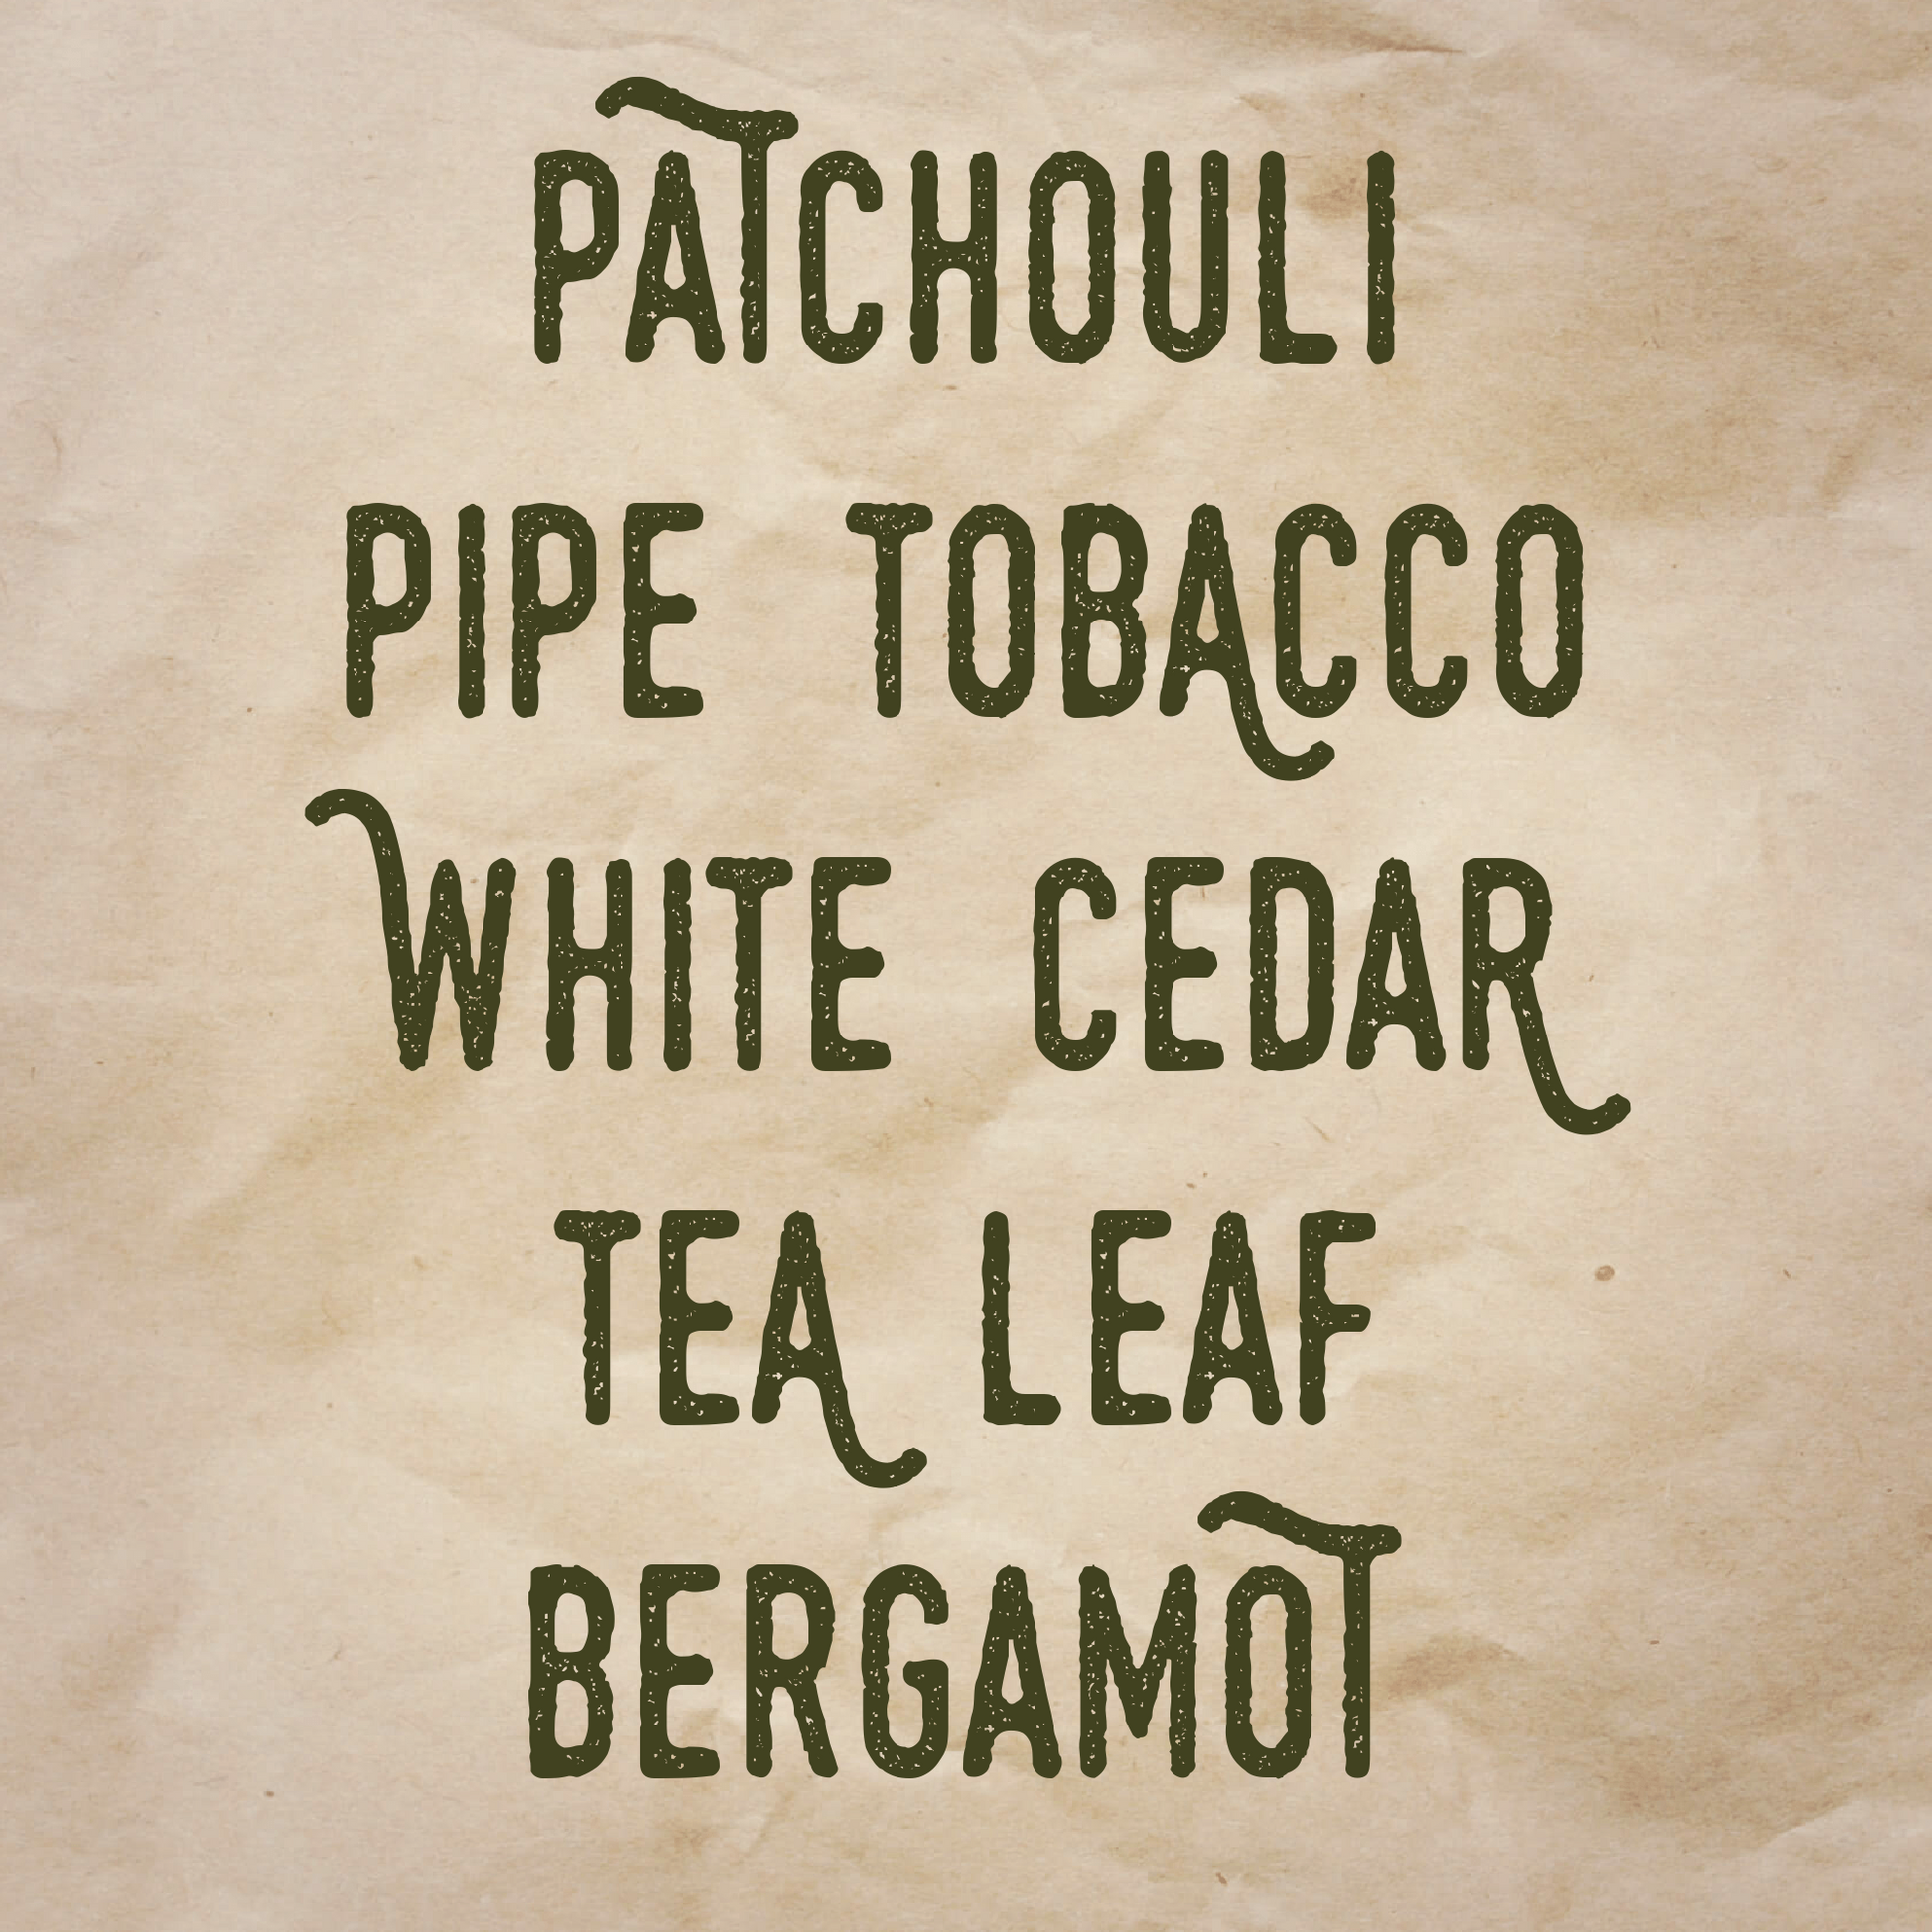 Footfalls scent notes: Patchouli, pipe tobacco, white cedar, tea leaf, and bergamot.